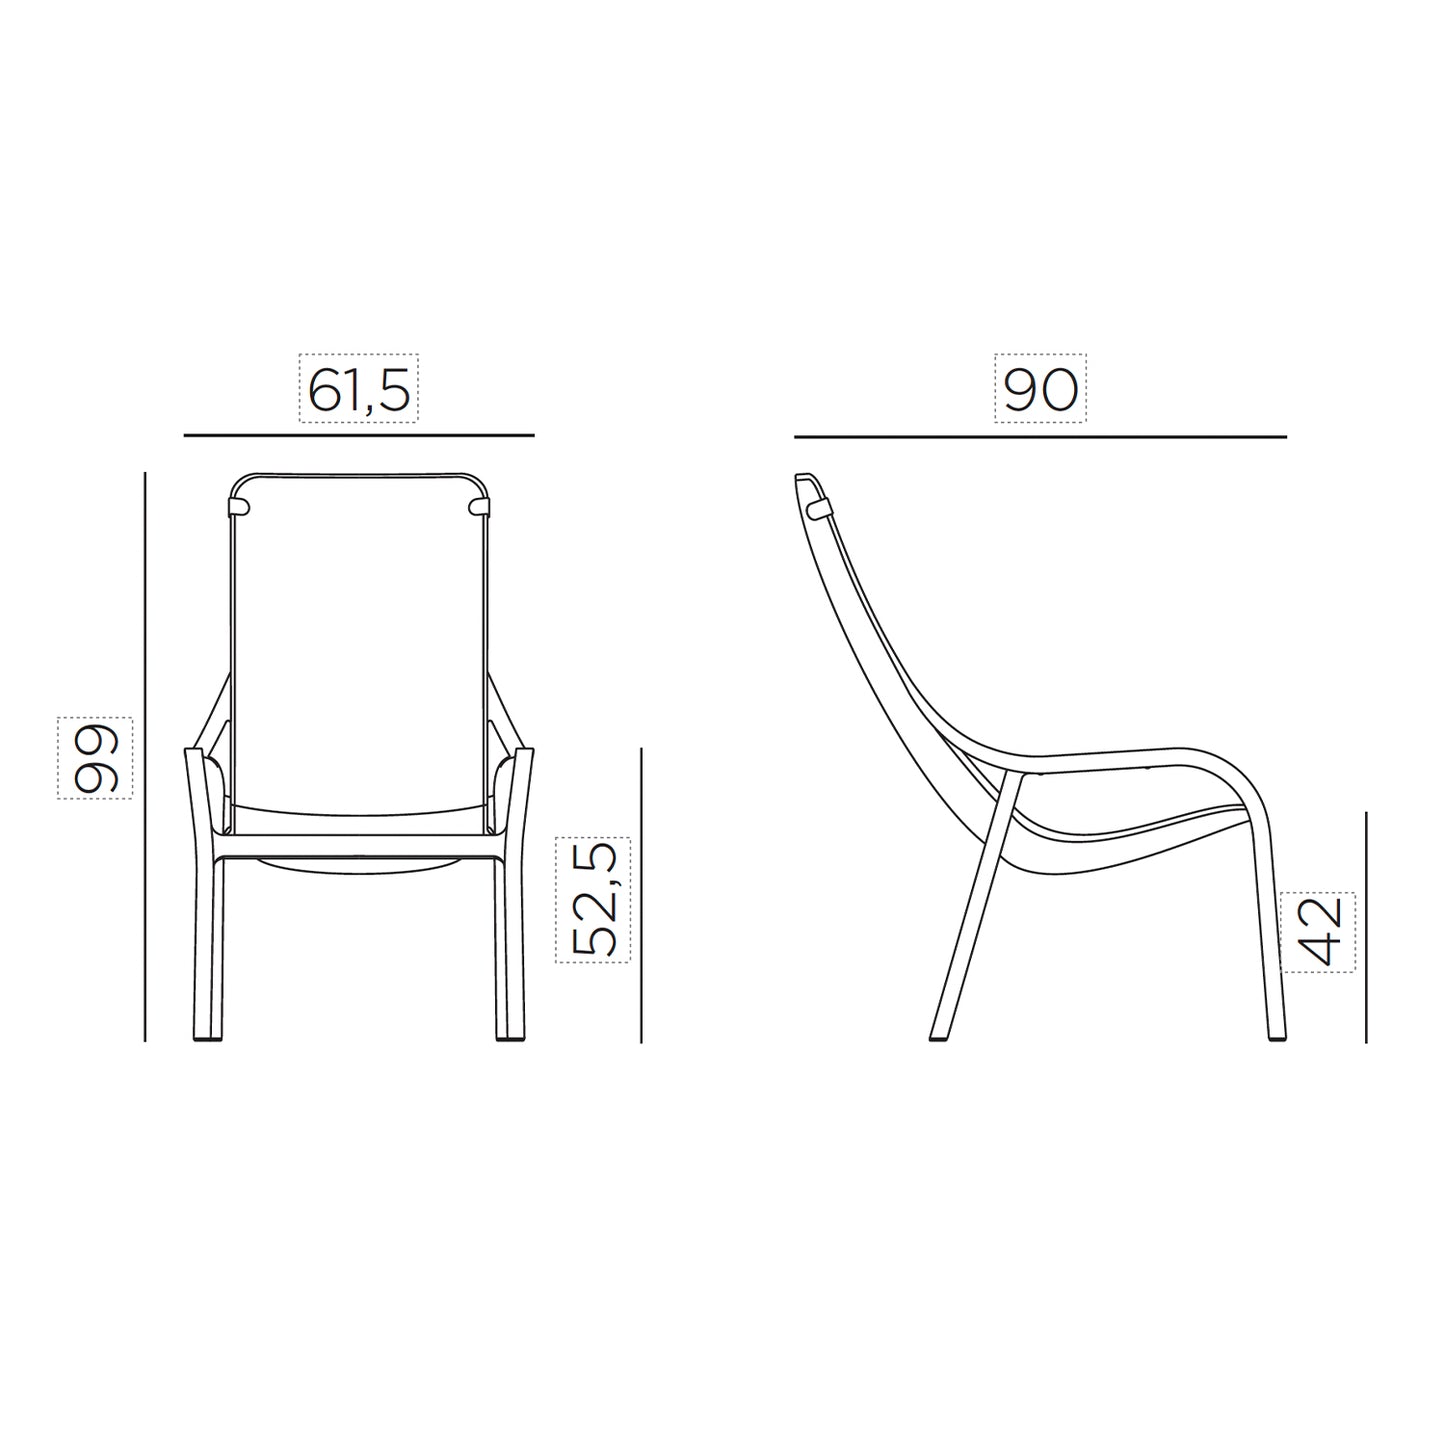 Garden Set - x2 Net Lounge Chairs By Nardi - Turquoise